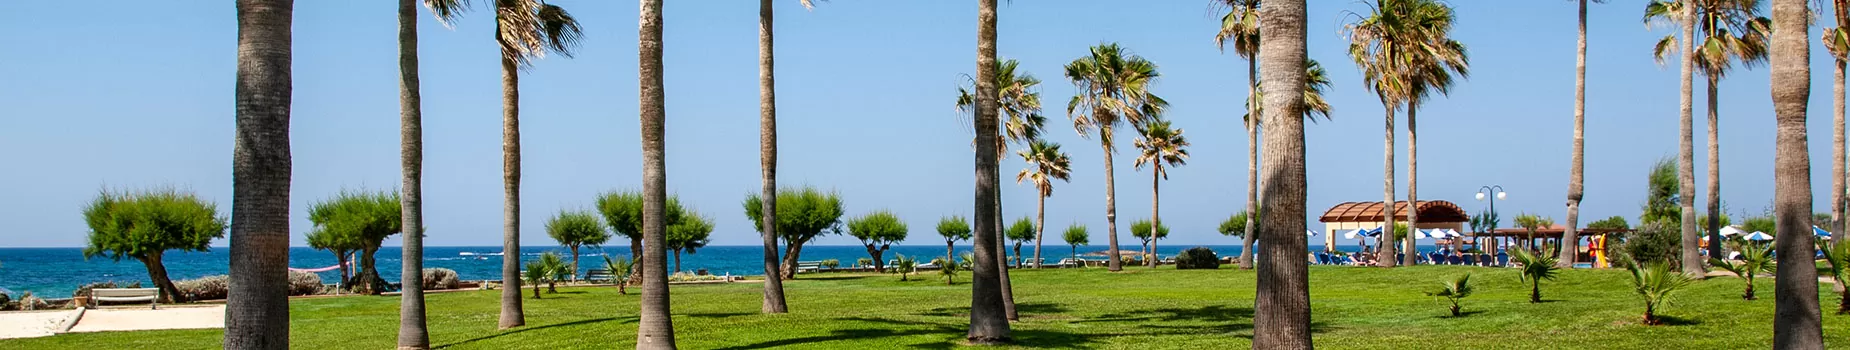 Palmen bij het strand van Malia